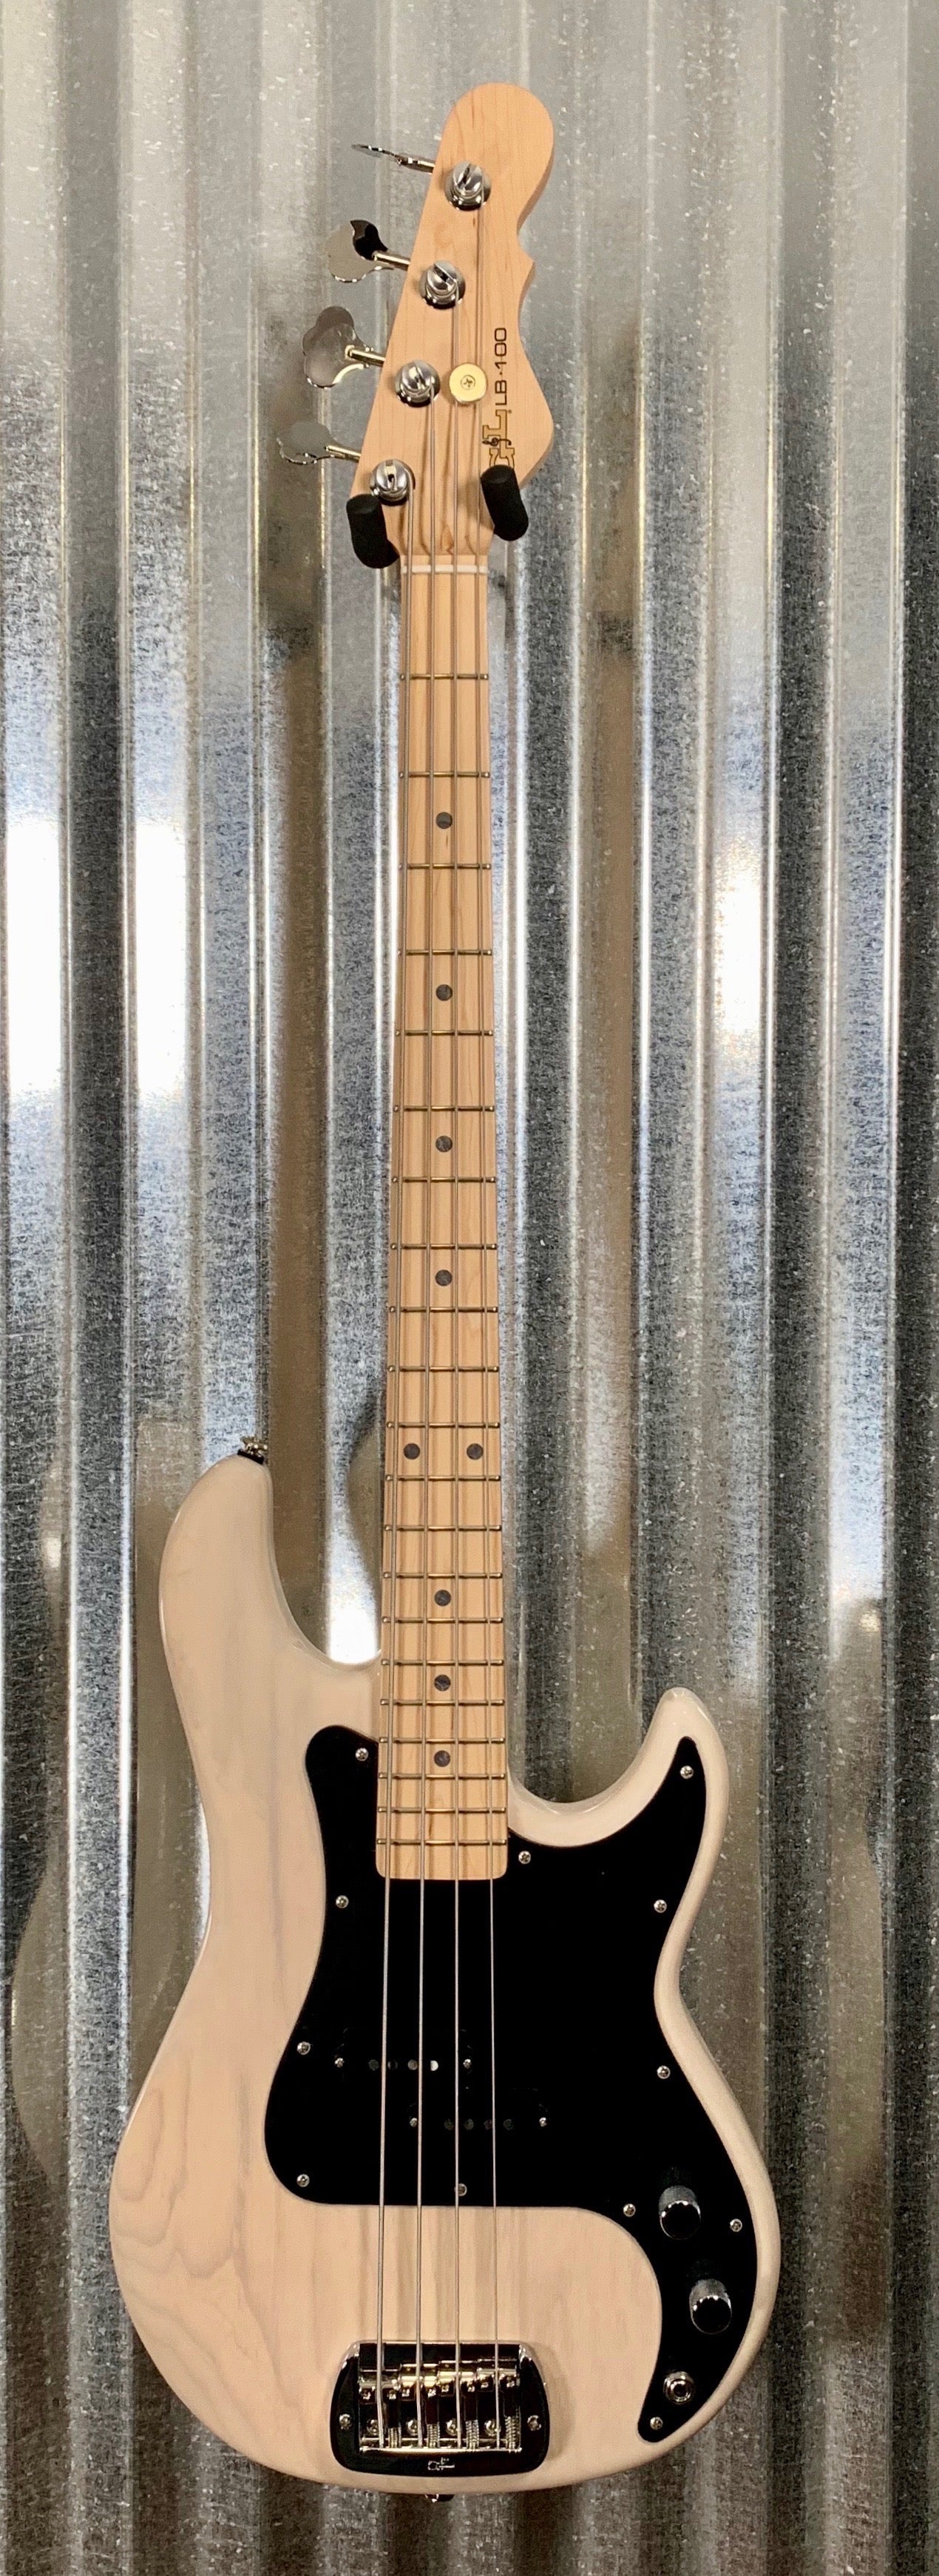 G&L USA Fullerton Custom LB100 Blonde 4 String Bass & Case LB-100 #4044